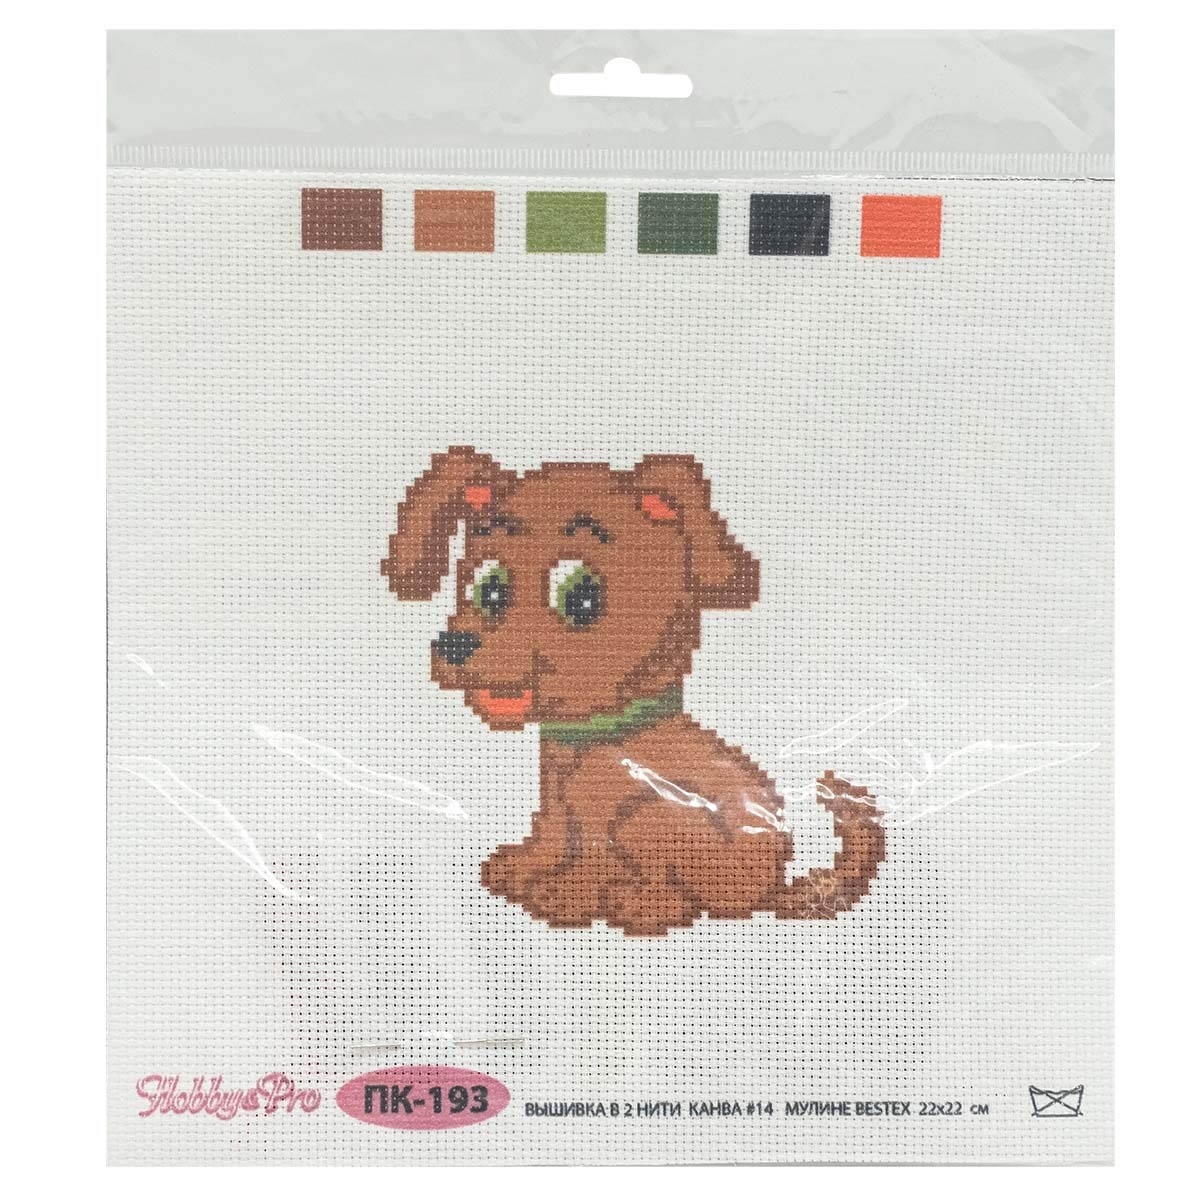 Best Friend Kids Cross Stitch Kit, code PK-193 Hobby & Pro